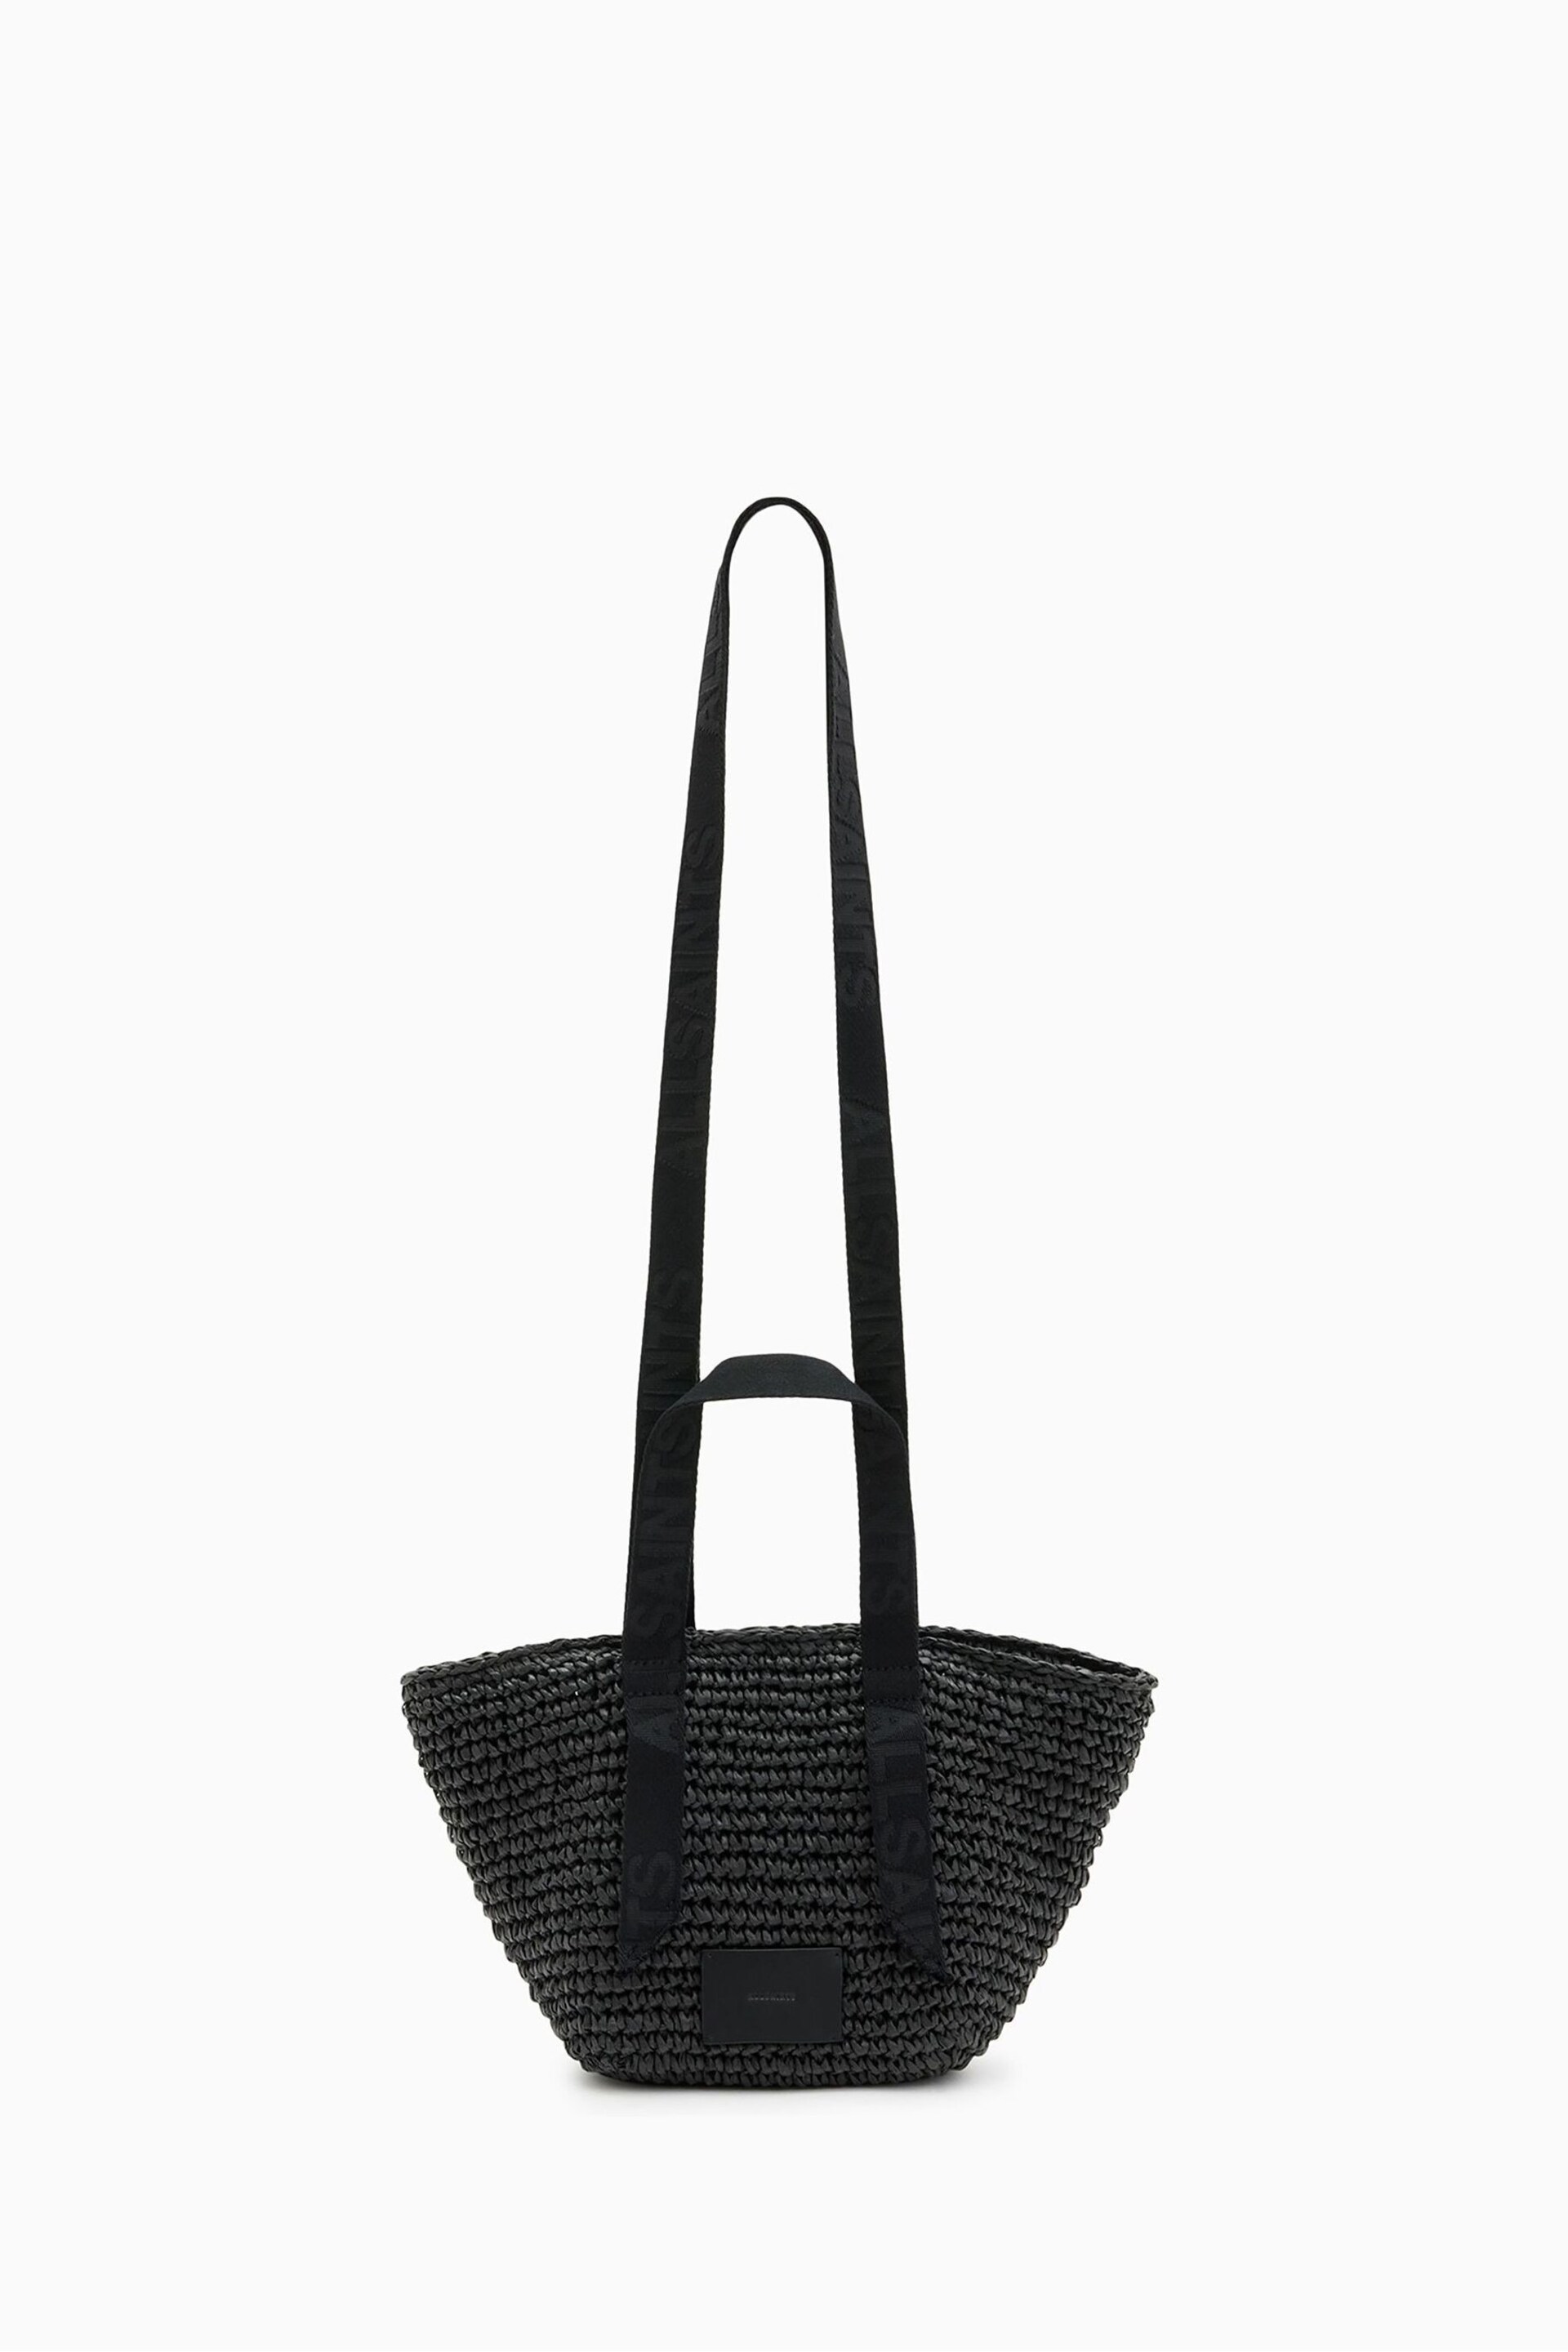 AllSaints Black Celayne Mini Tote Bag - Image 3 of 6